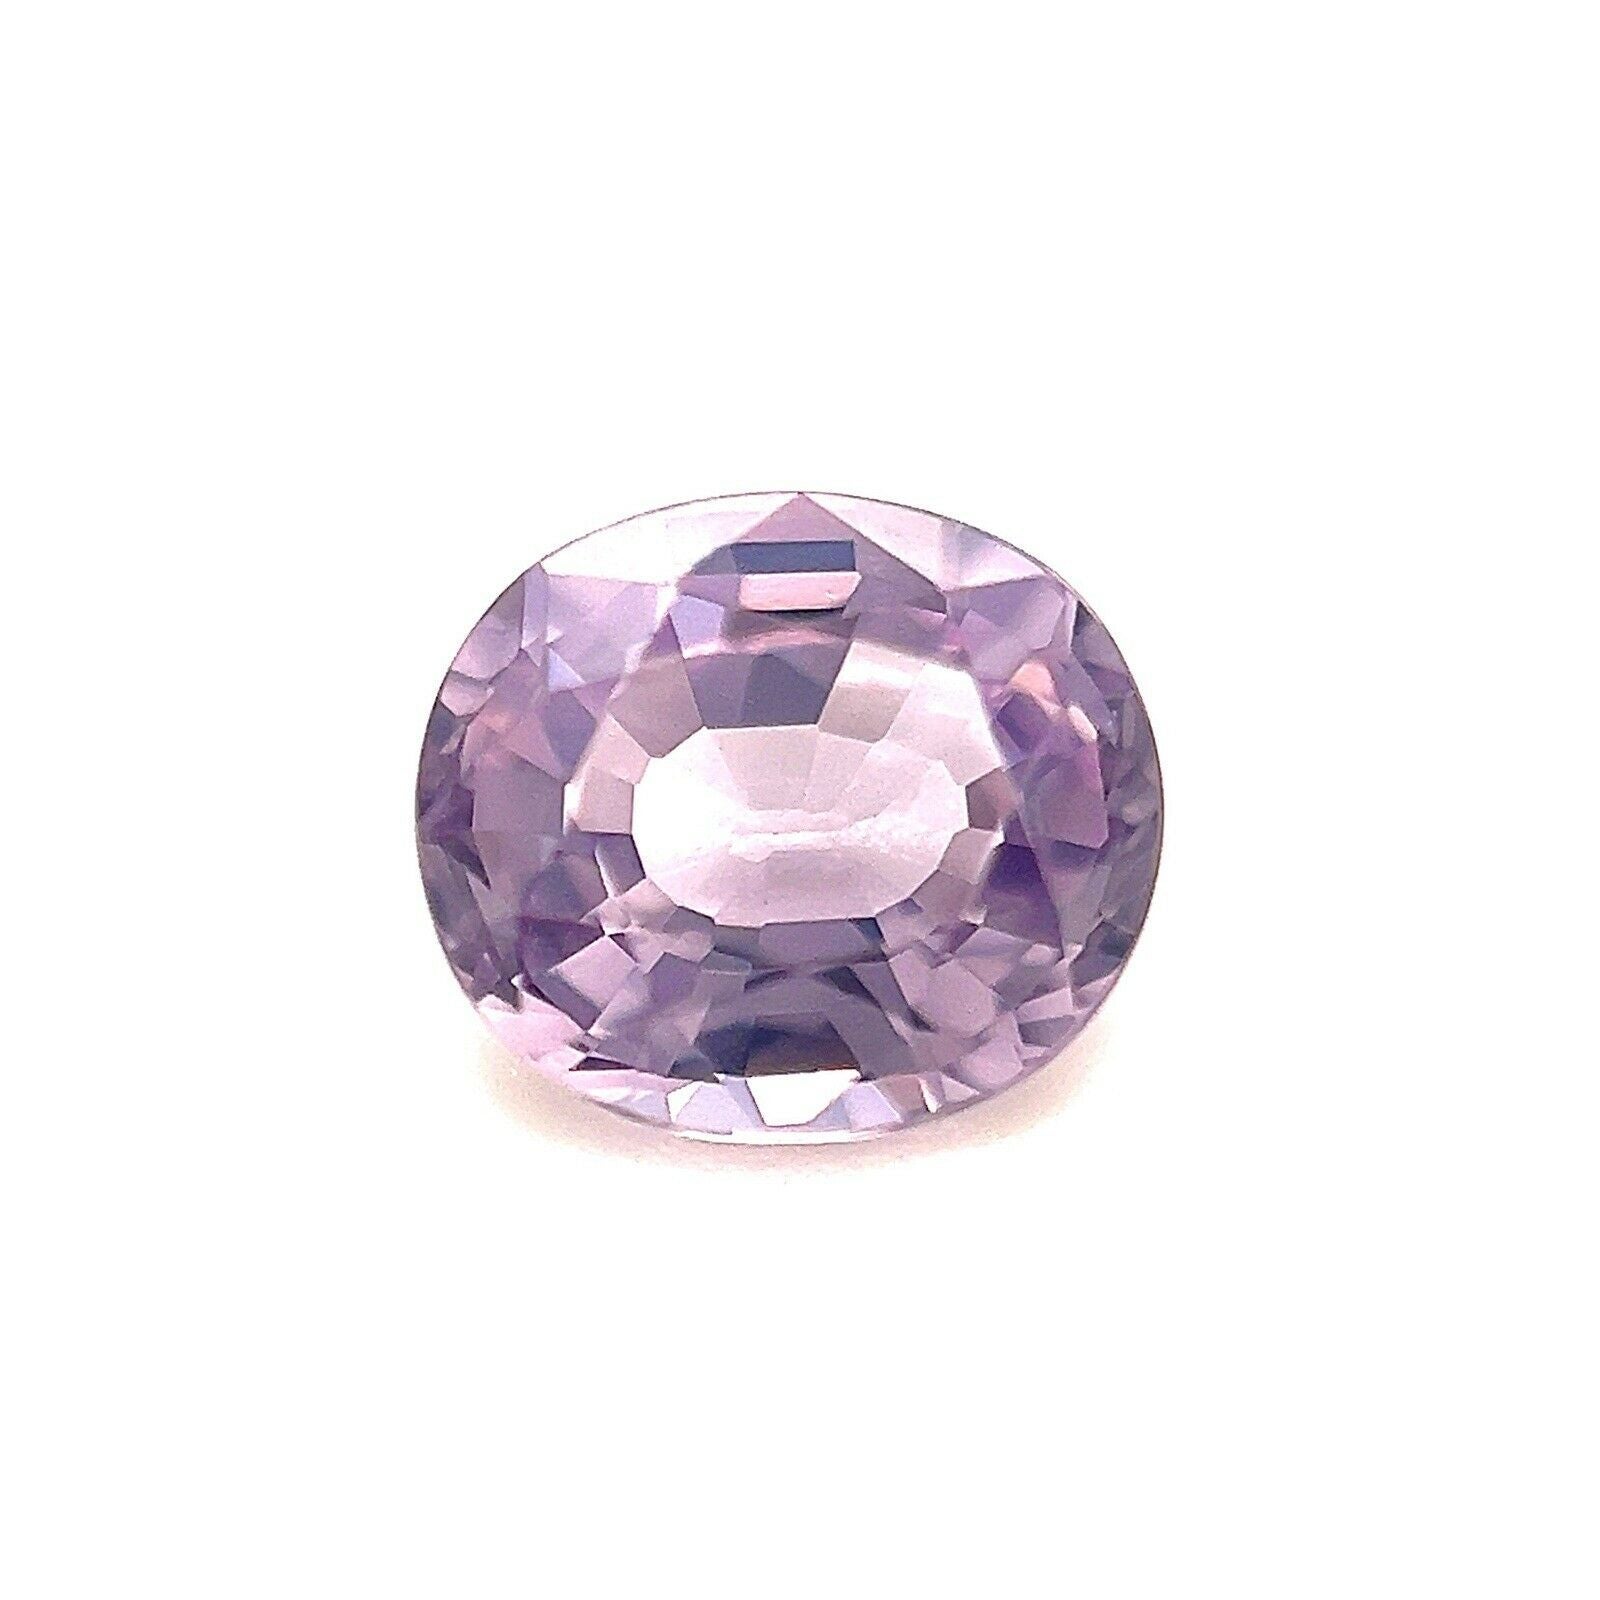 Fine Violet Purple Spinel 1.47ct Oval Cut Rare Gemstone Loose Gemme